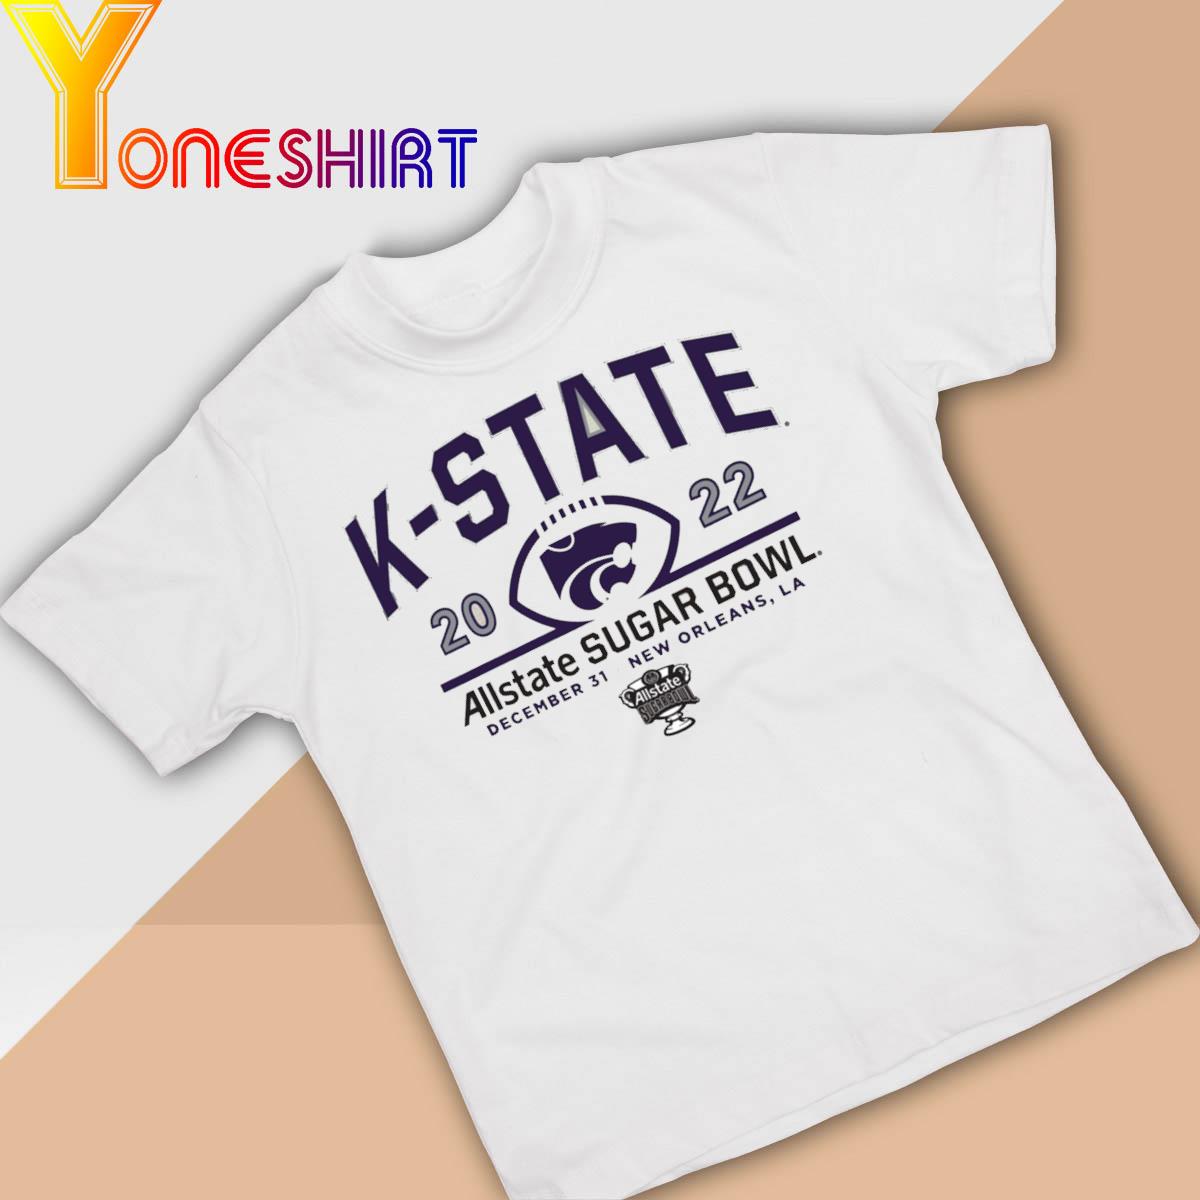 Official K-State 2022 Allstate Sugar Bowl shirt